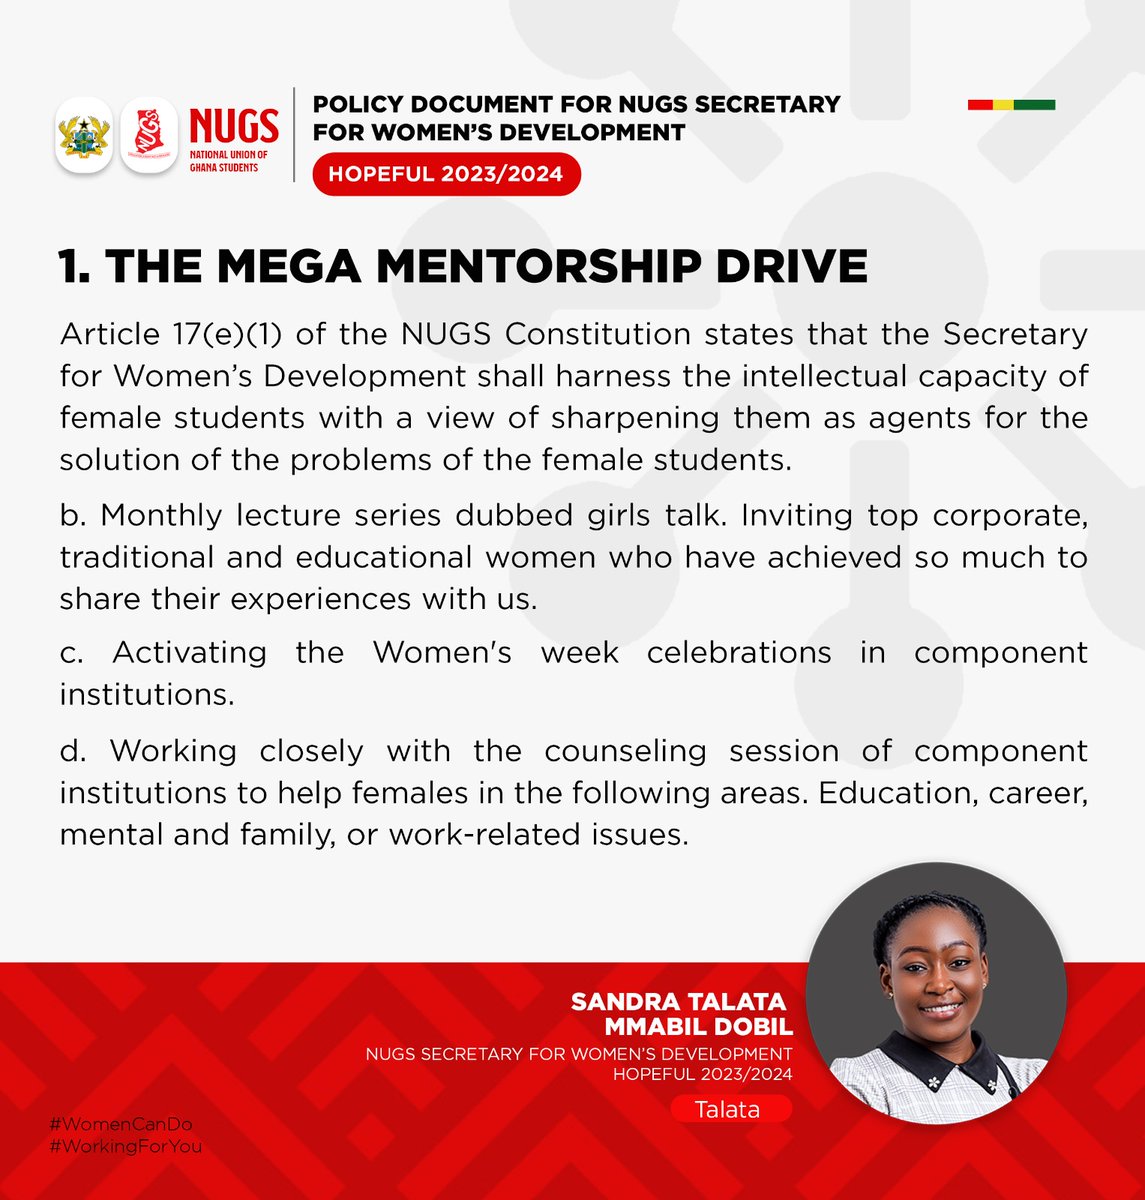 First policy
The Mega Mentorship Drive
#WomenCanDo
#WorkingForYou
#Talata4nugswocom